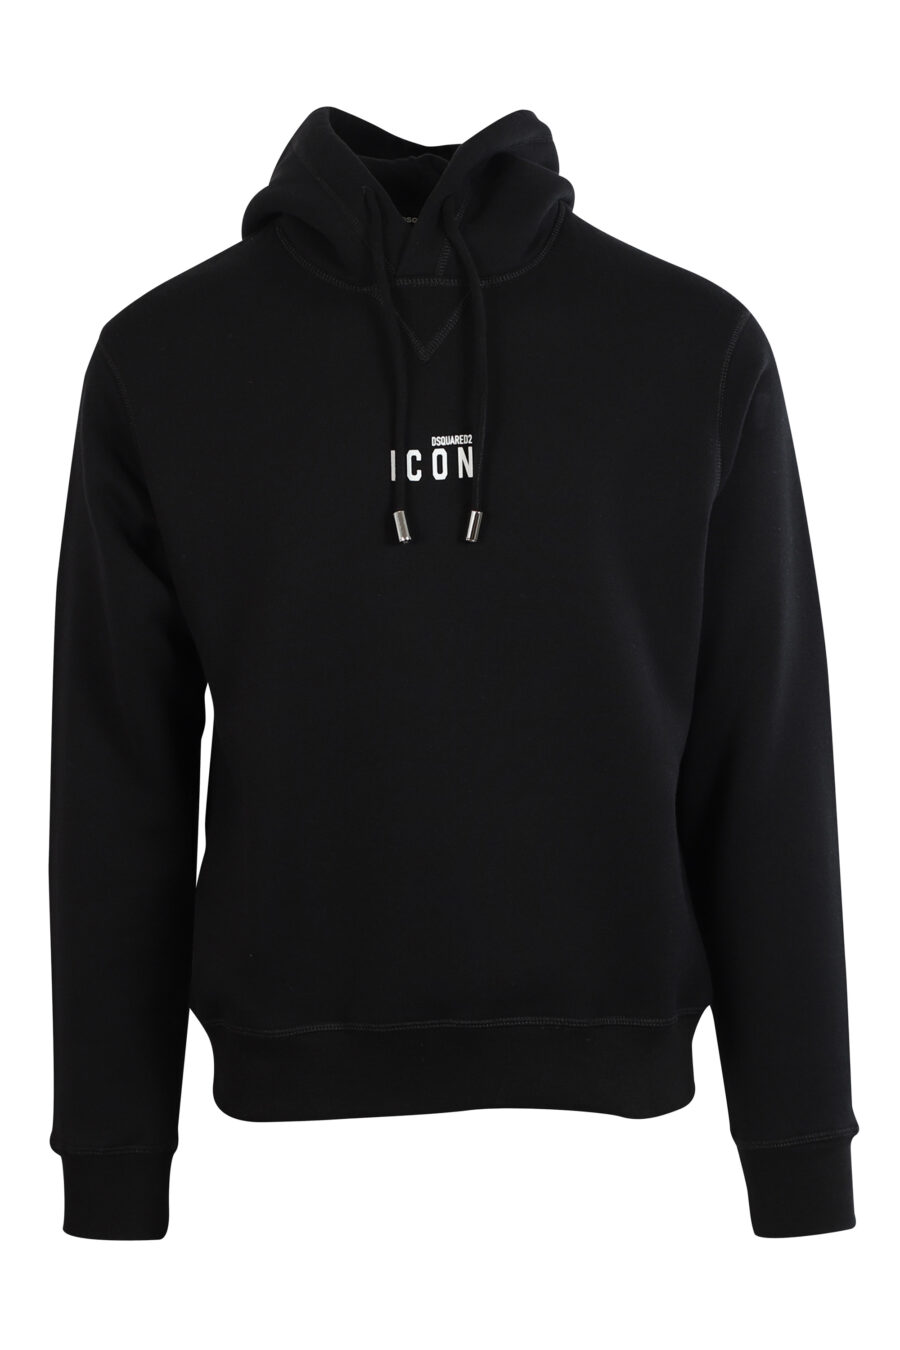 Black hooded sweatshirt with white centred mini logo - 8052134120743